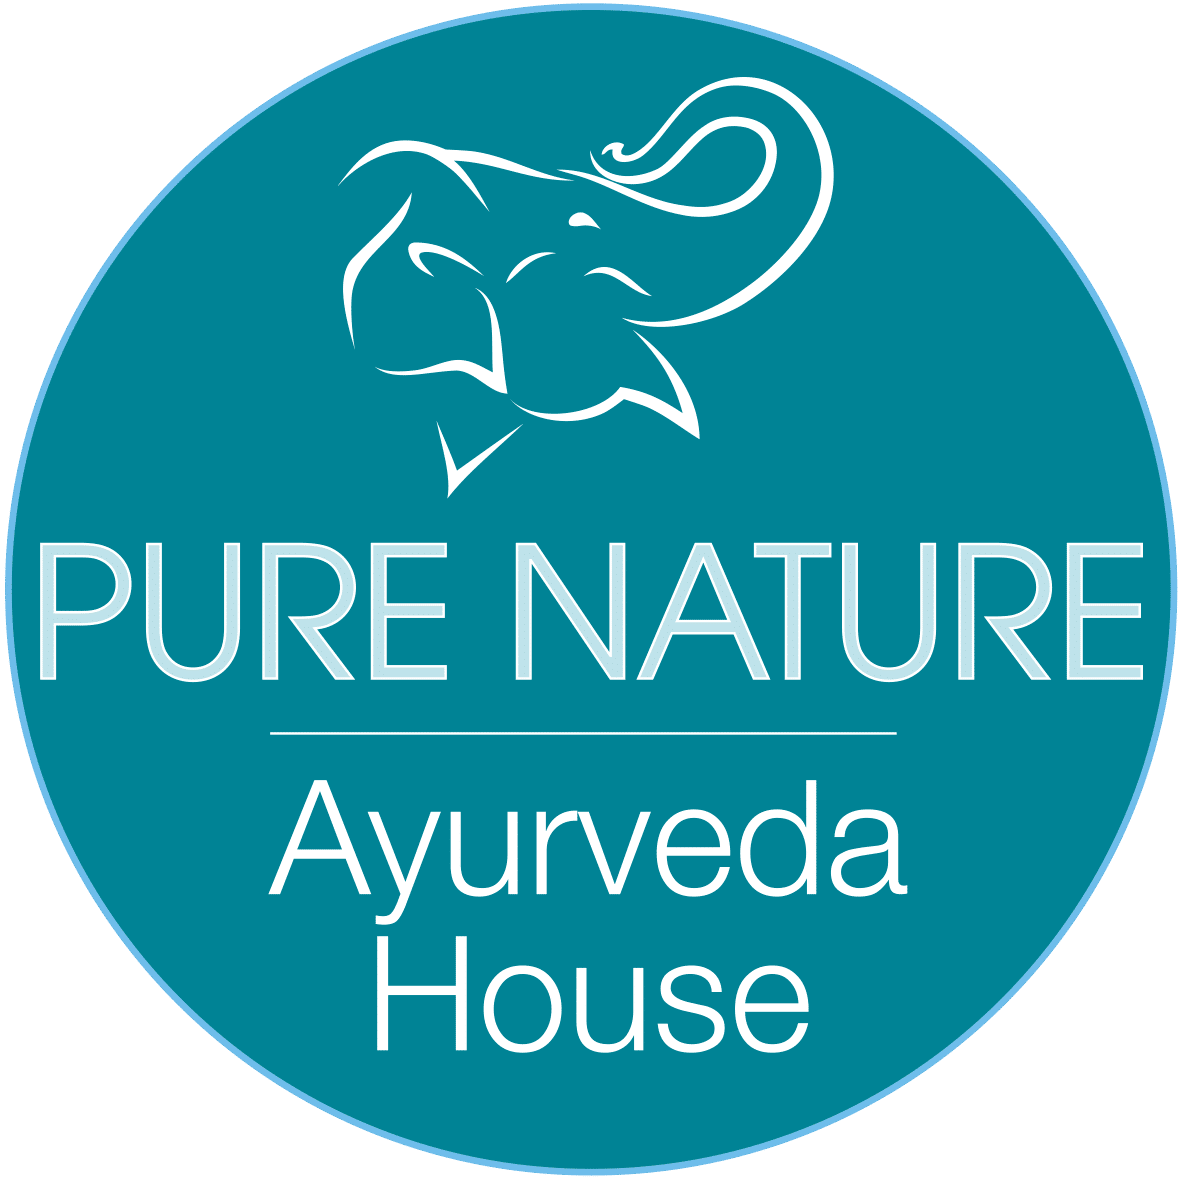 PURE NATURE AYURVEDA HOUSE